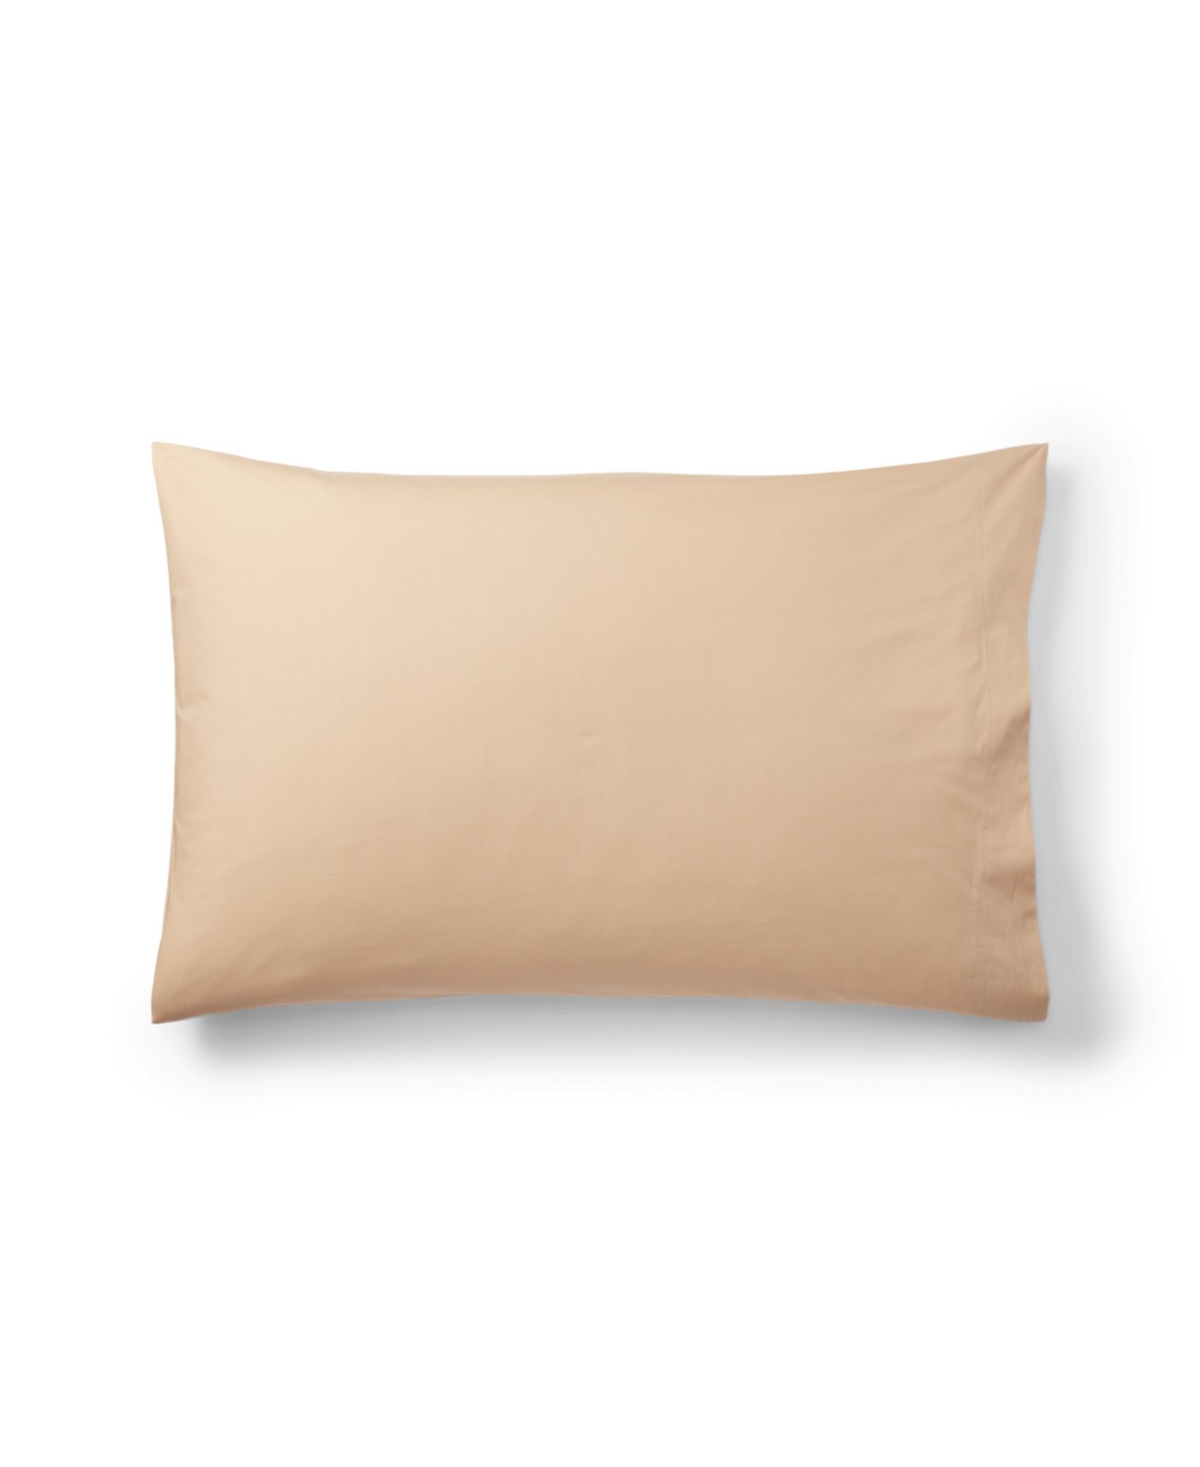 Lauren Ralph Lauren Sloane Anti-microbial Pillowcase Pair, King In Hemp